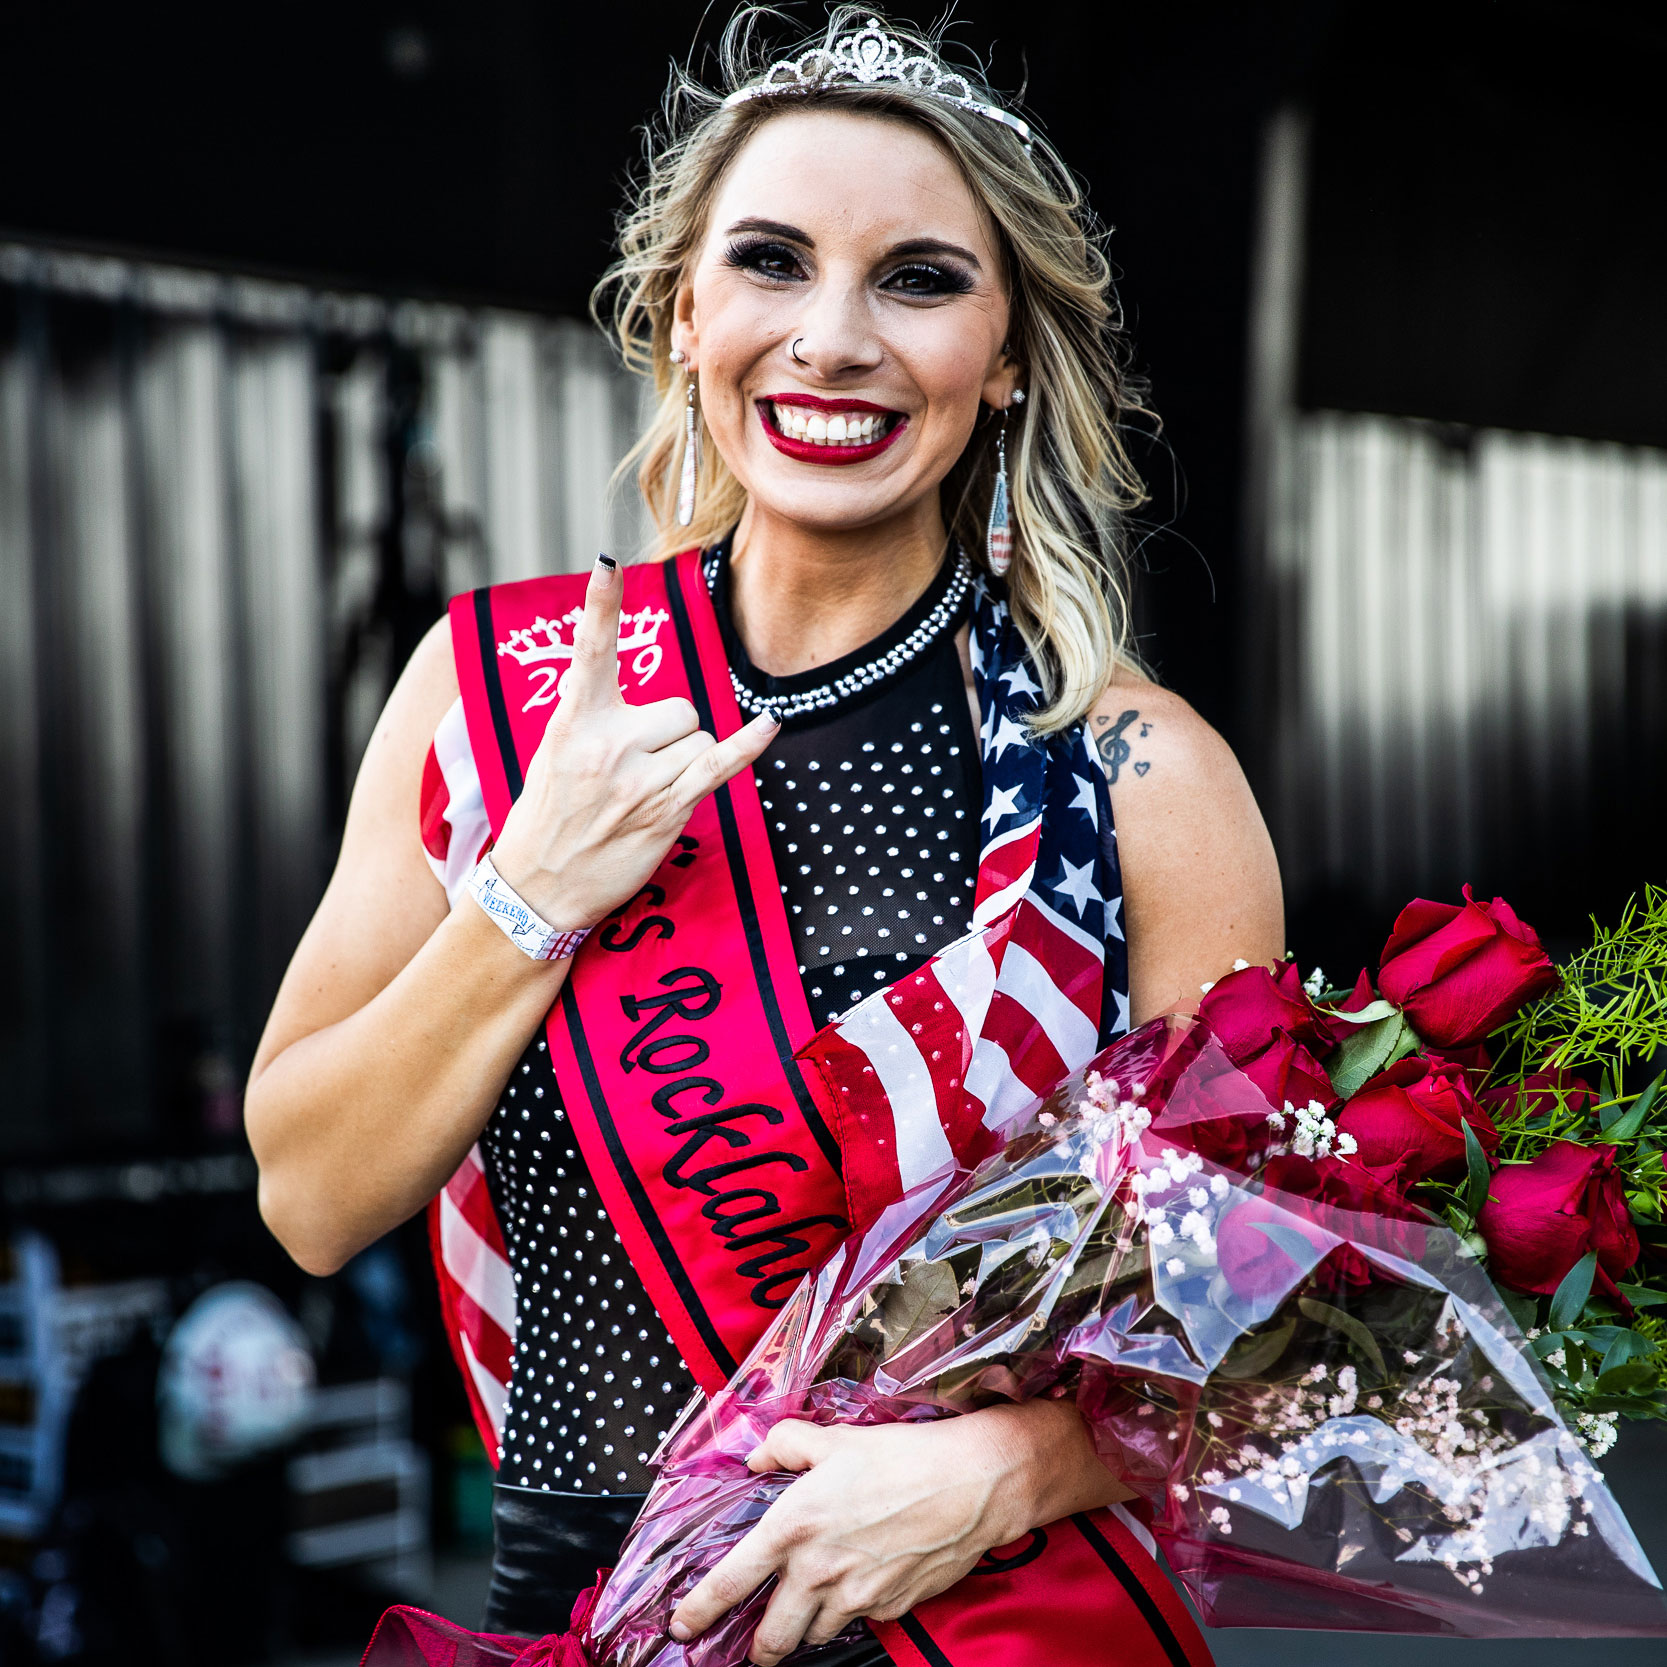 Miss Rocklahoma 2019